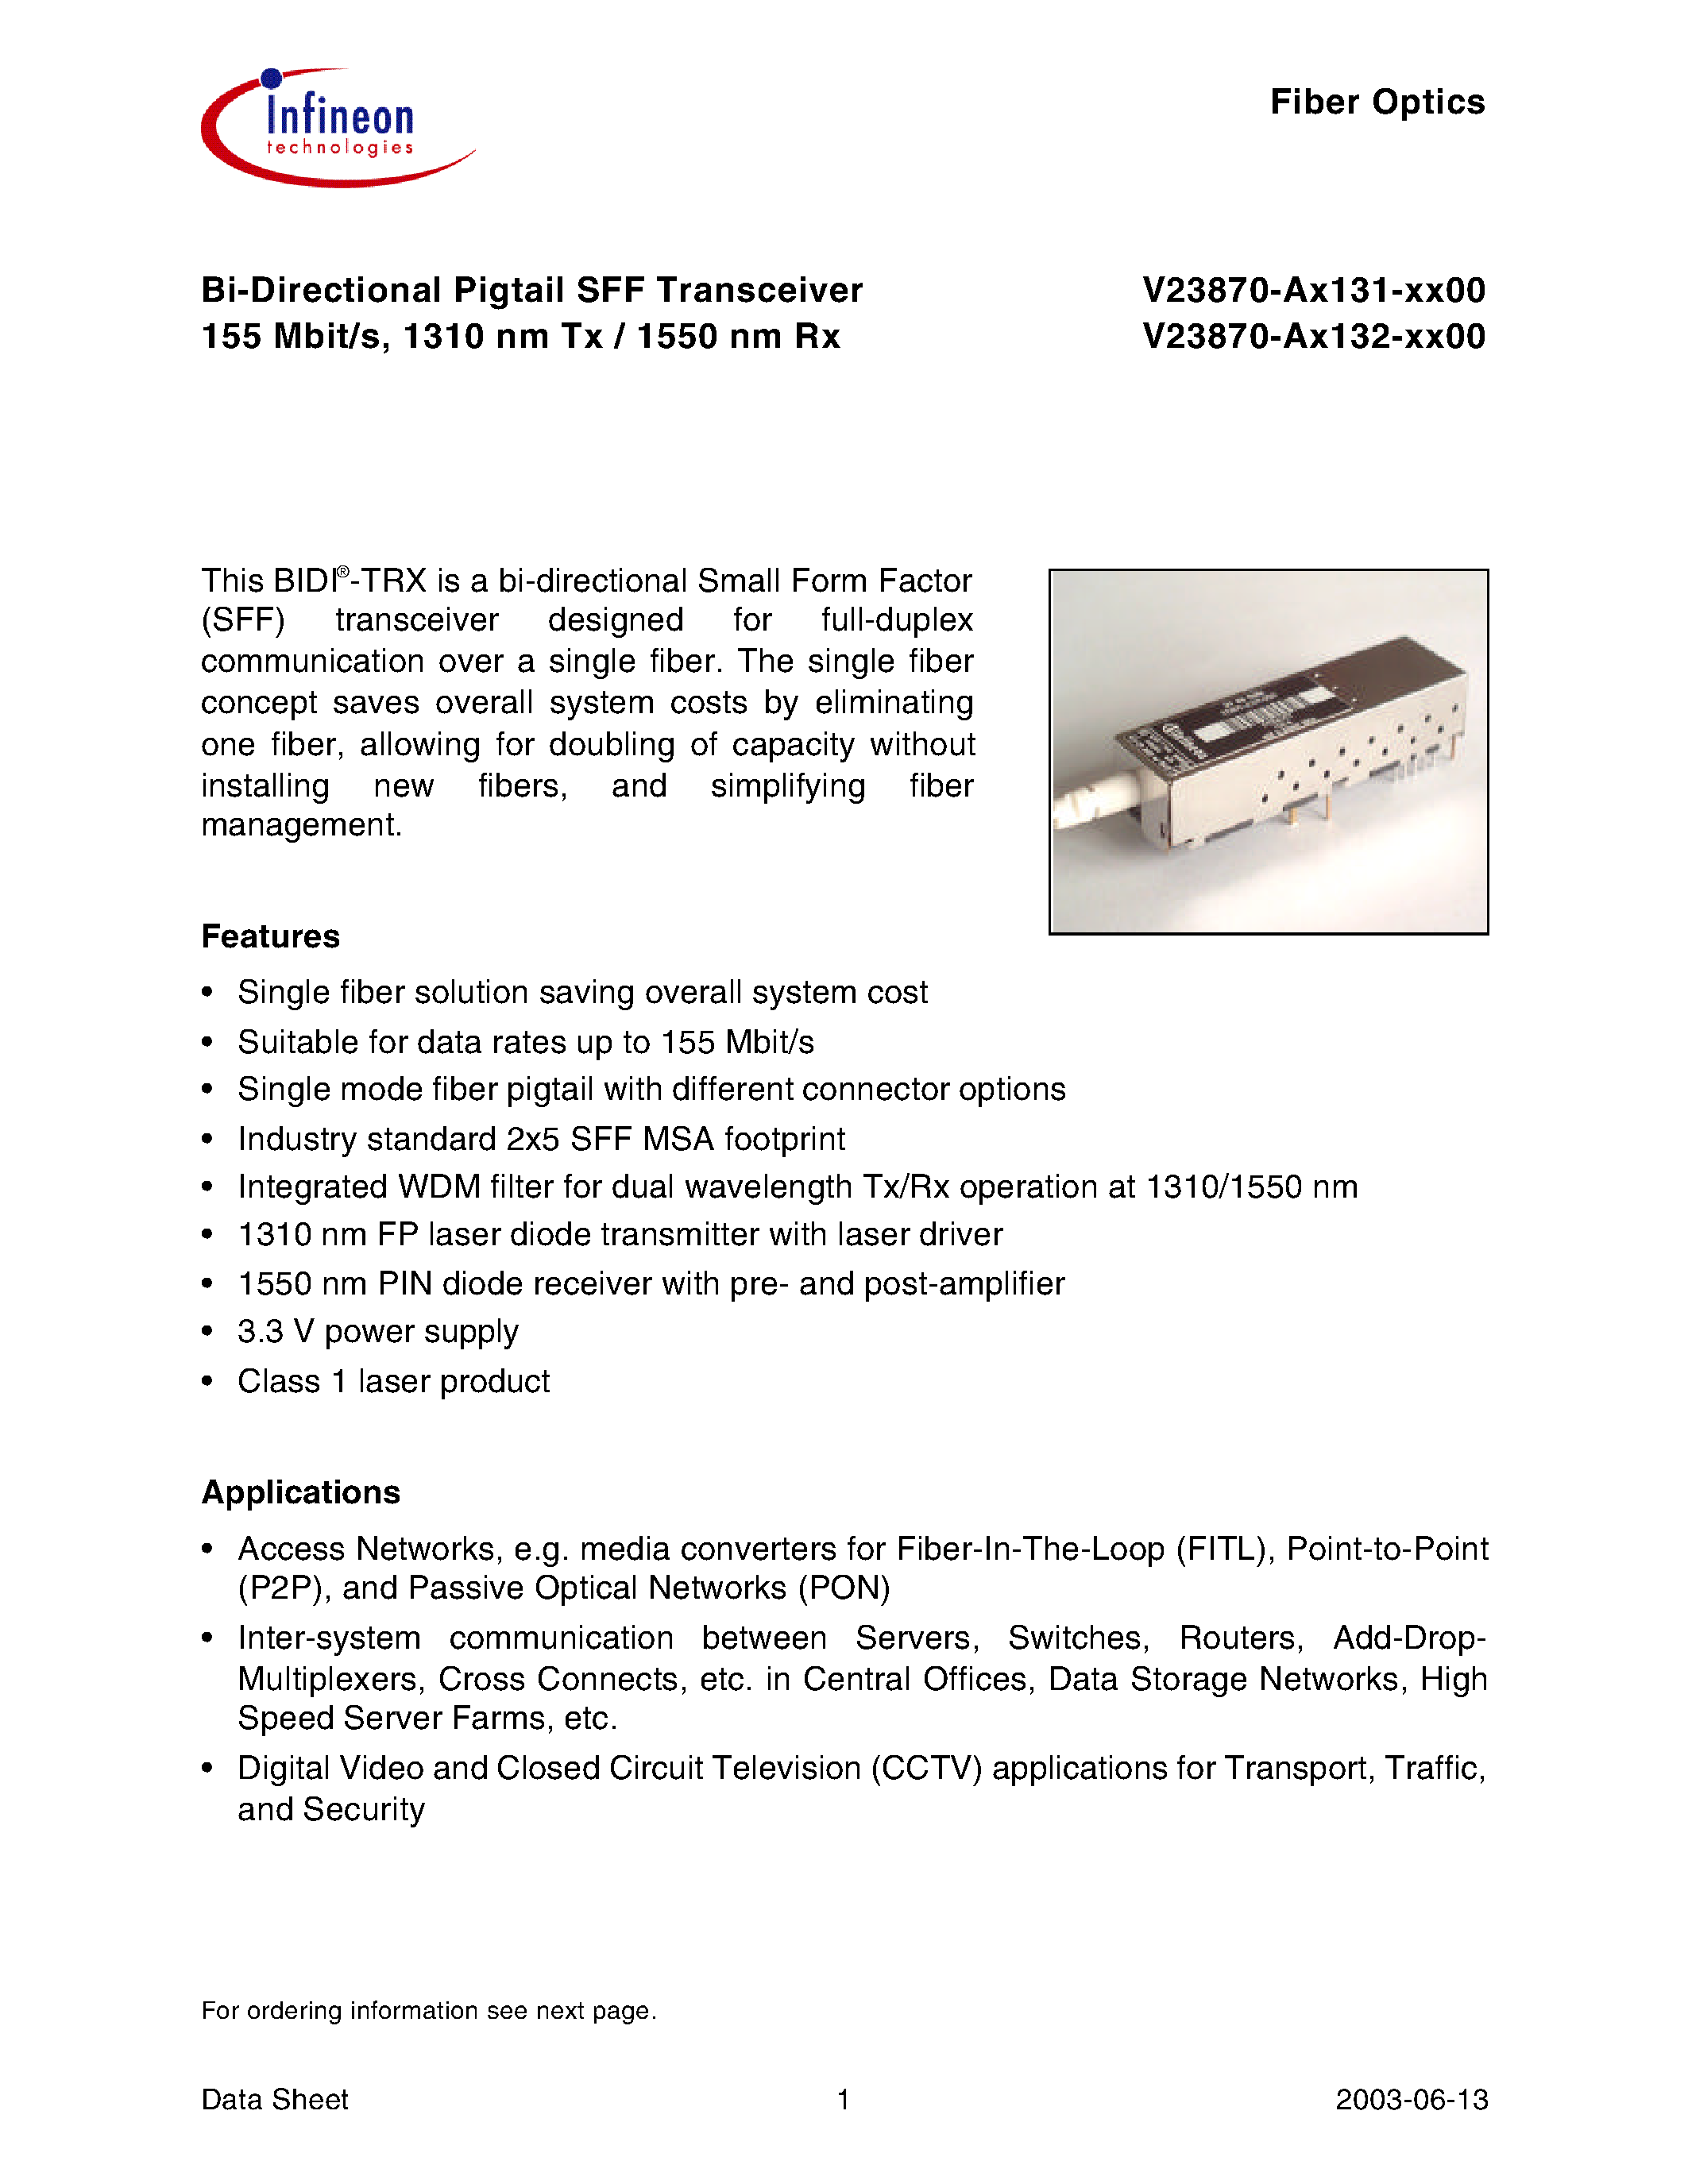 Даташит V23870-A3131-K500 - Bi-Directional Pigtail SFF Transceiver 155 Mbit/s/ 1310 nm Tx / 1550 nm Rx страница 1